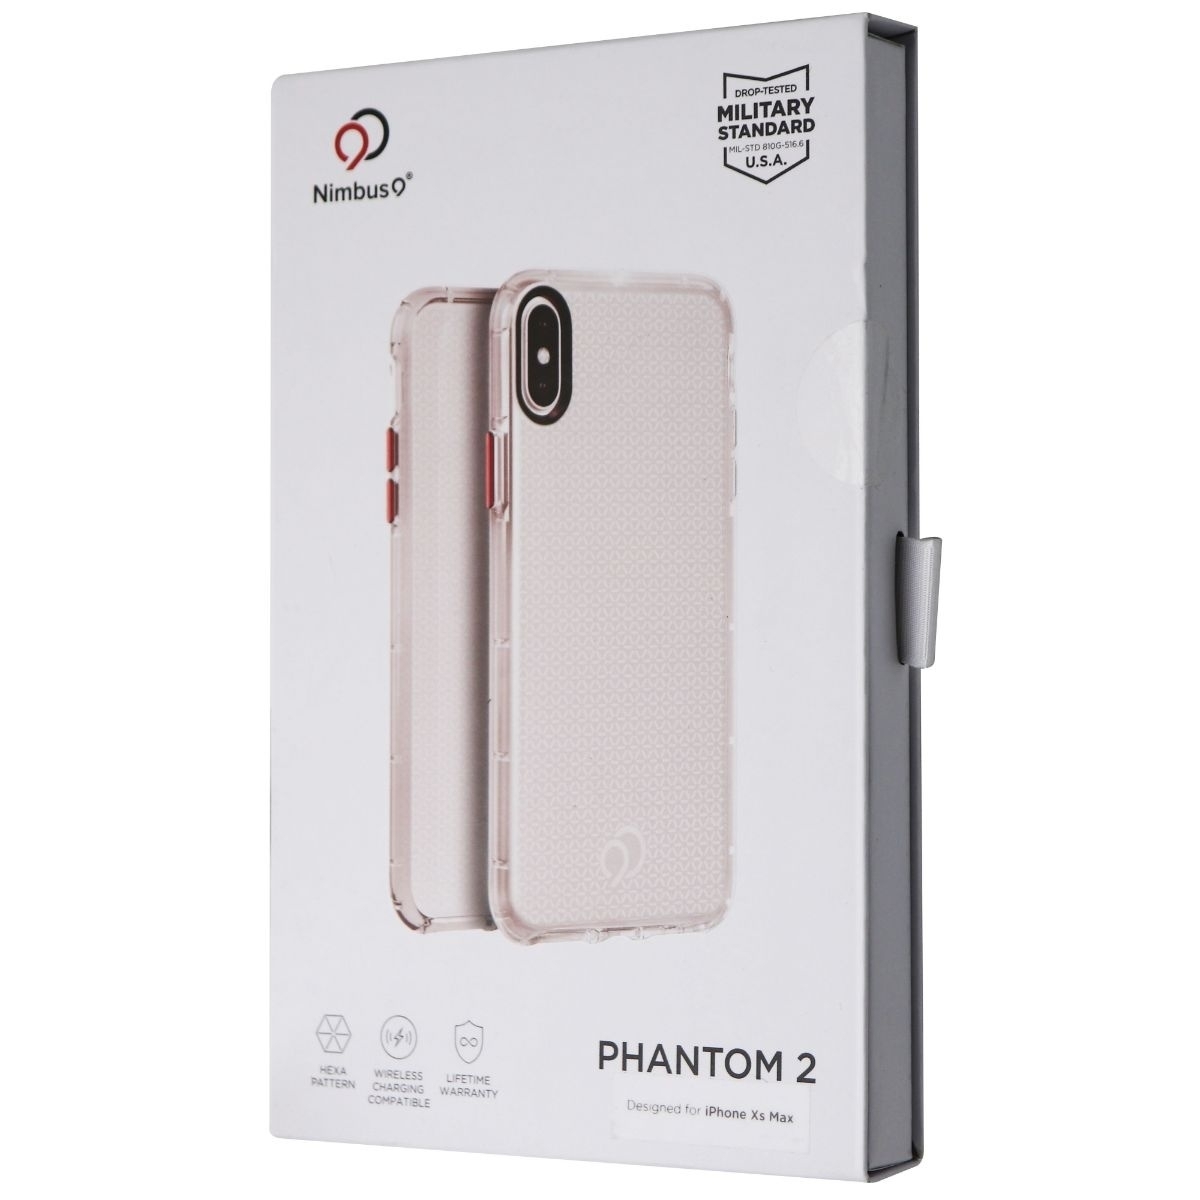 Nimbus9 Phantom 2 Slim Protective Gel Case For Apple IPhone XS Max - Clear